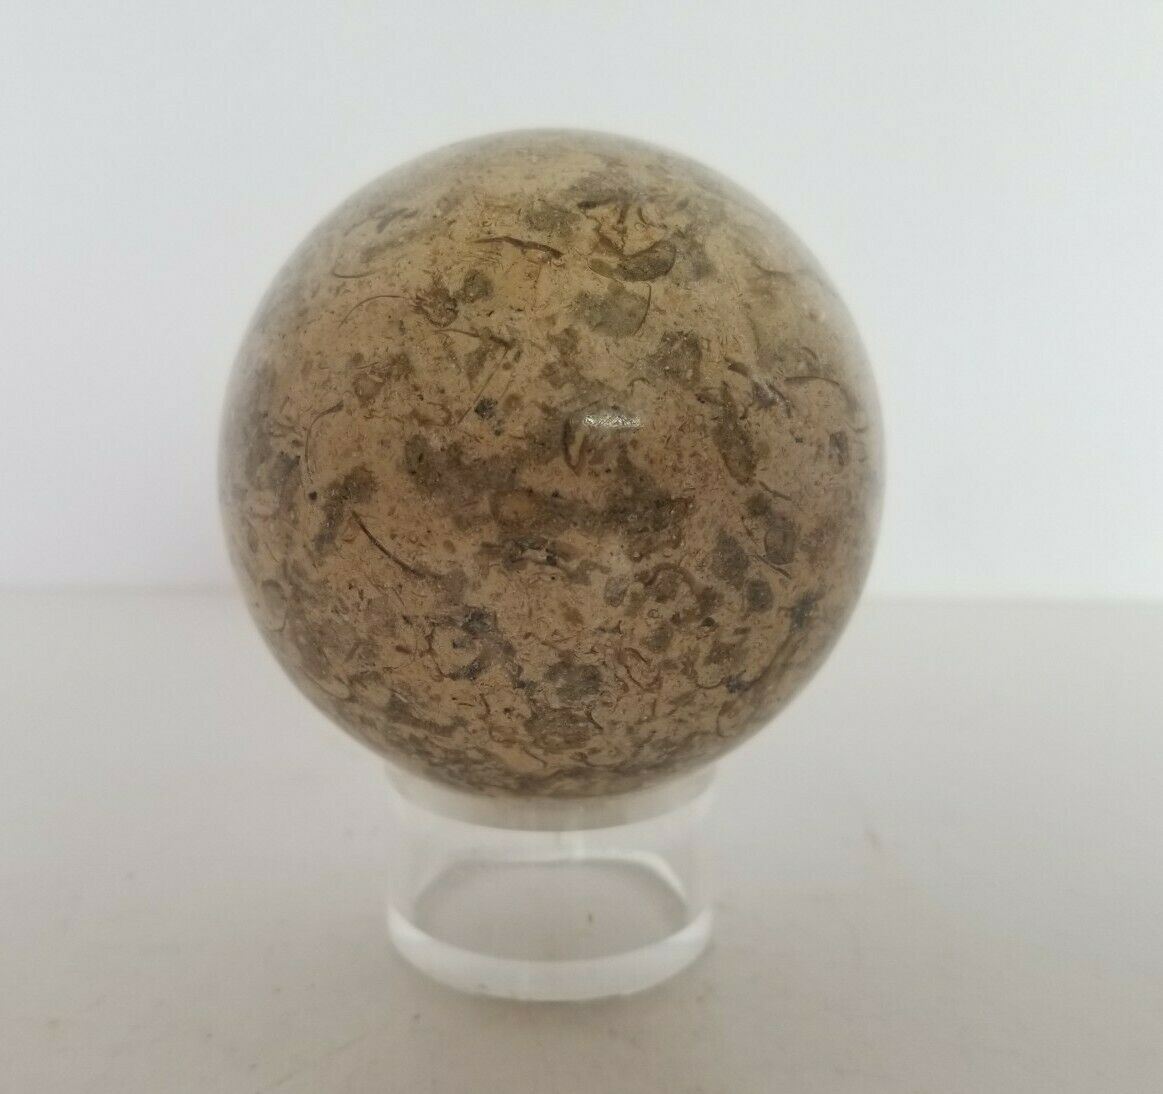 FOSSILIFEROUS Sphere (7.3cm) 2 3/4